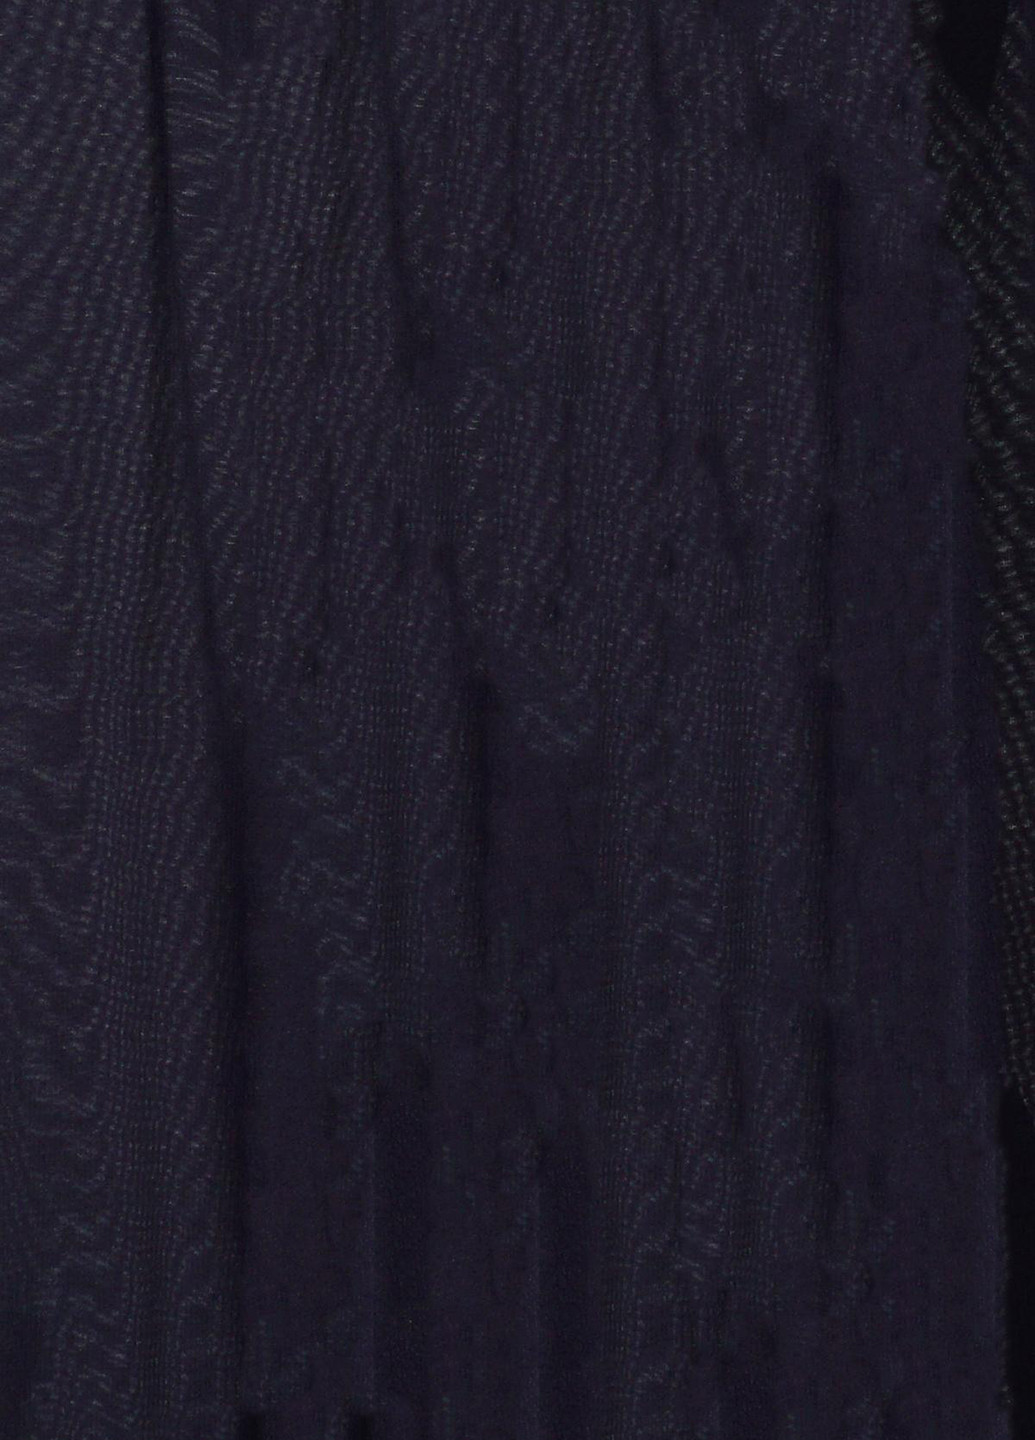 Комбинезон Maison Scotch комбинезон-брюки однотонный тёмно-синий кэжуал купро, трикотаж